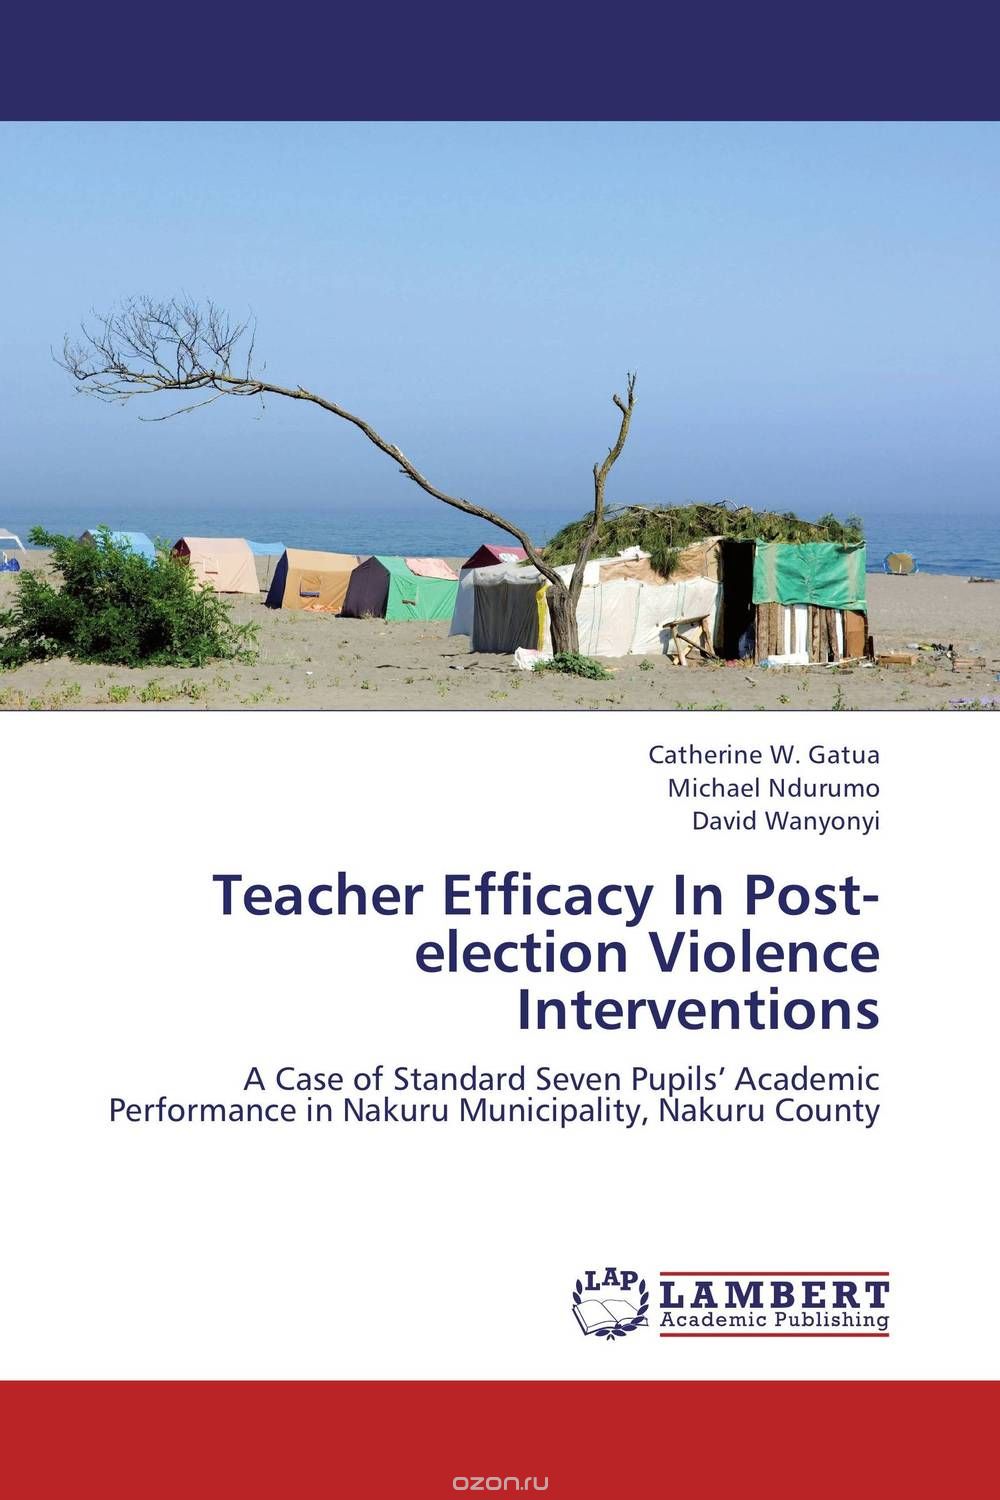 Скачать книгу "Teacher Efficacy In Post-election Violence Interventions"